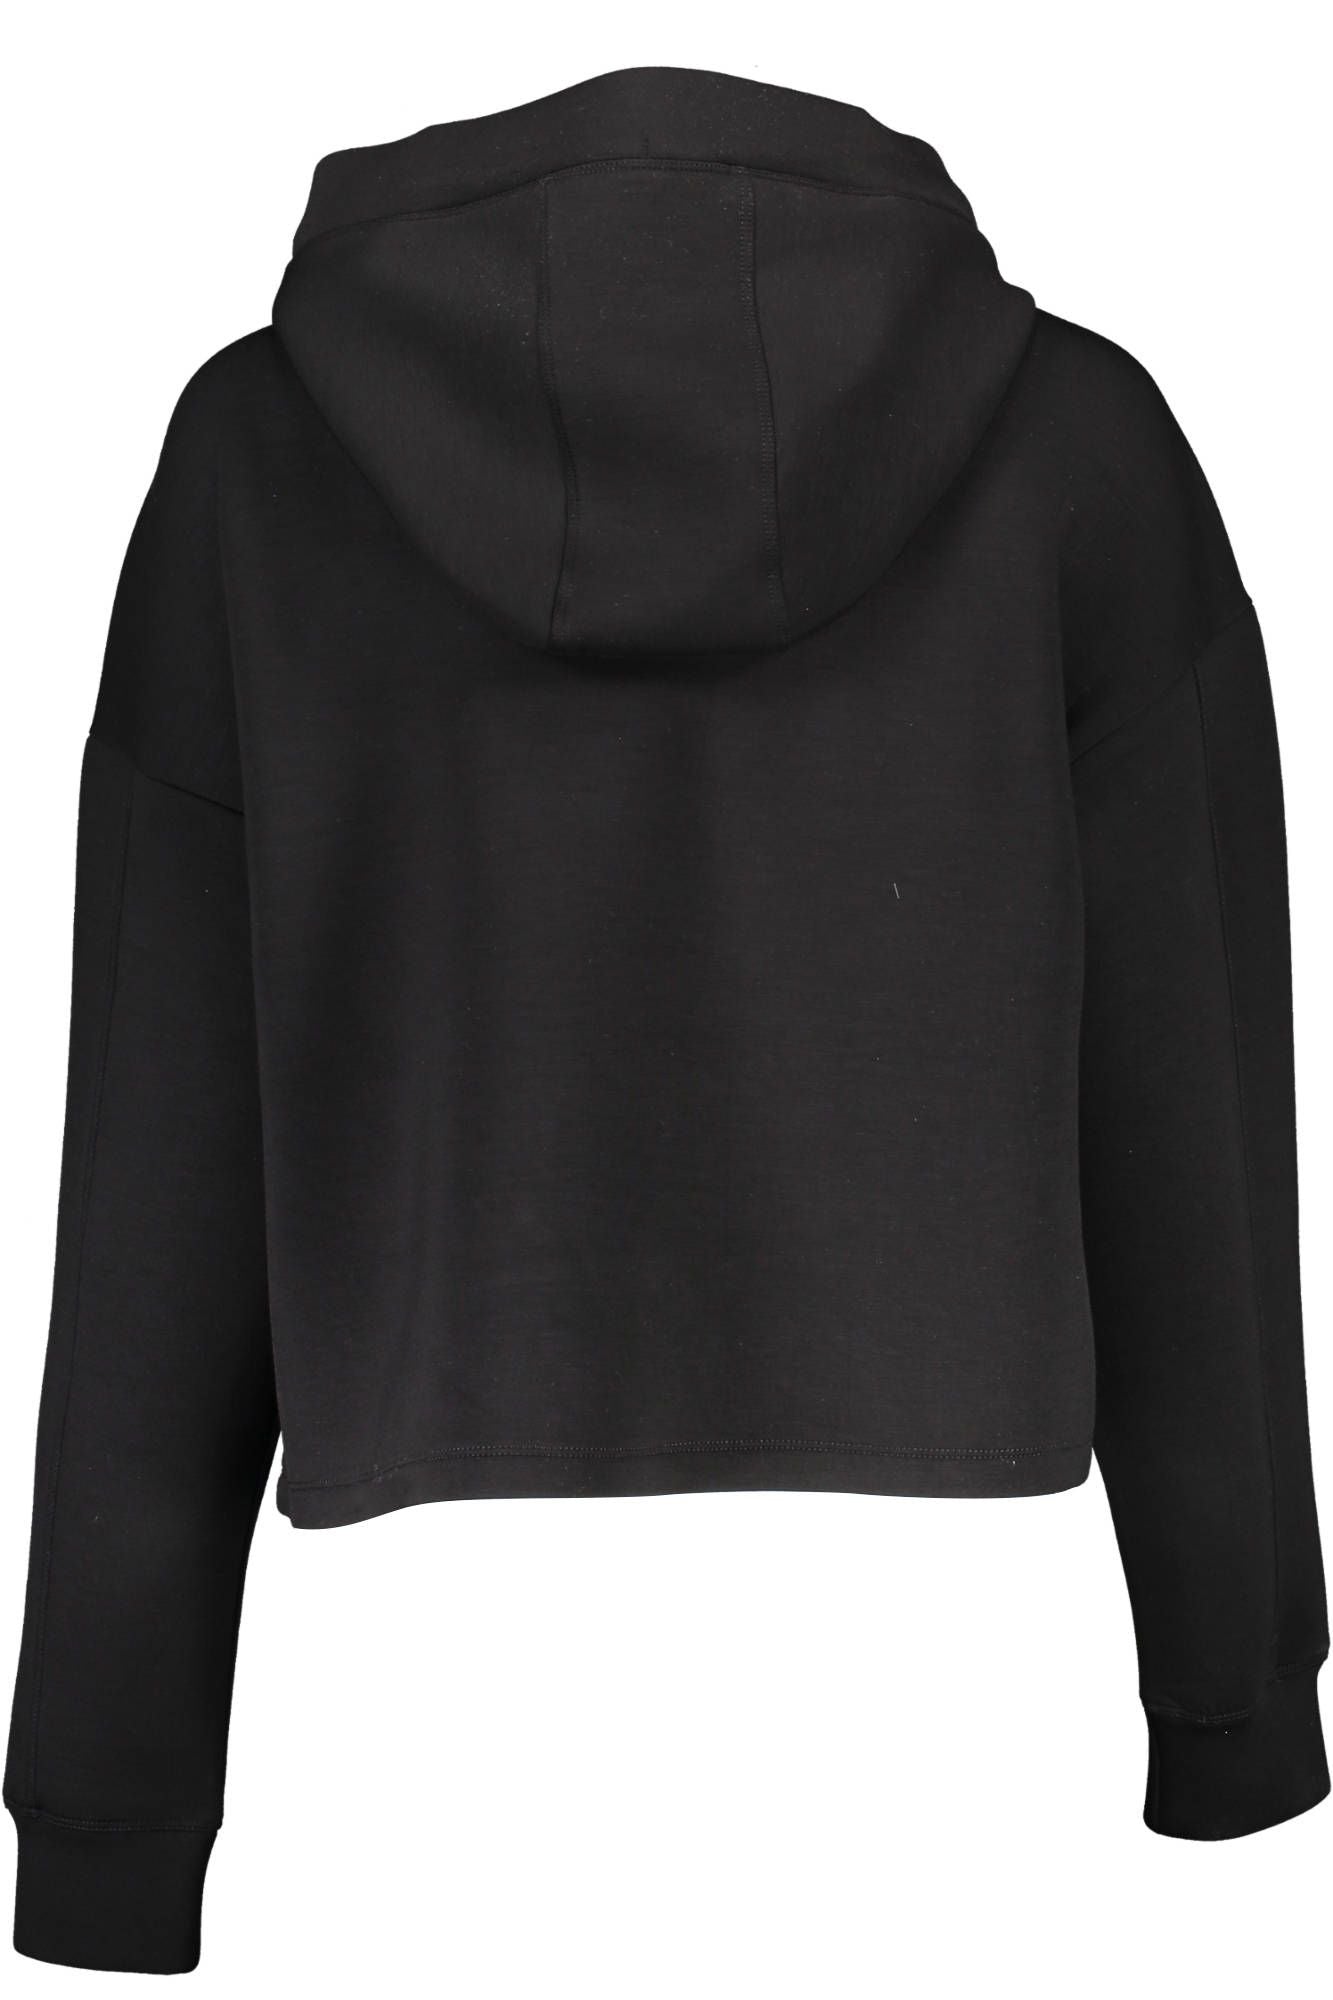 Chic Black Hooded Sweatshirt with Logo Print